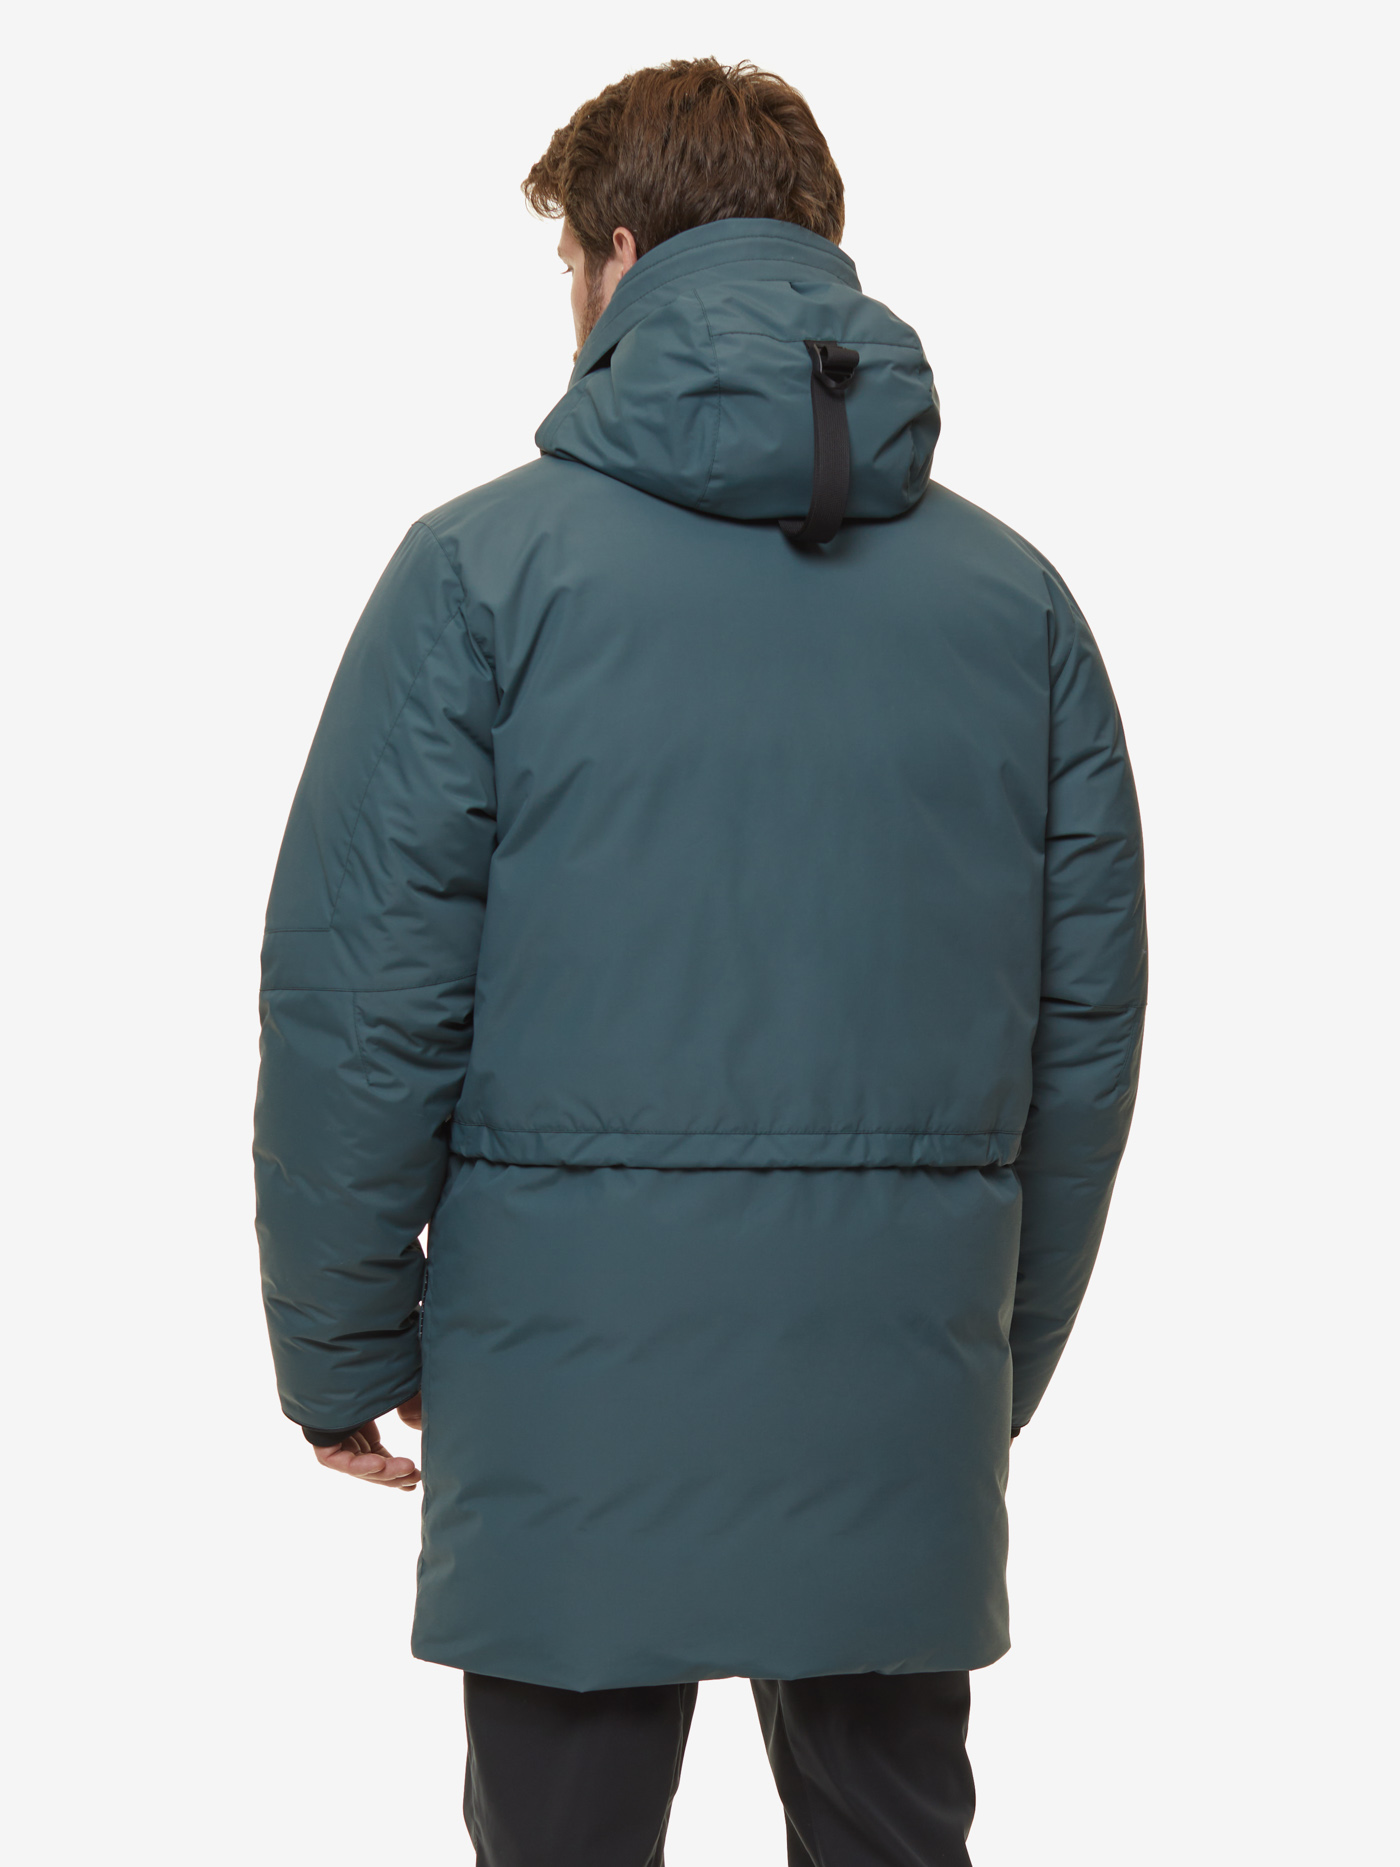 Куртка BASK, размер 60, цвет 9319 21228-9319-060 Alaska v3 - фото 4